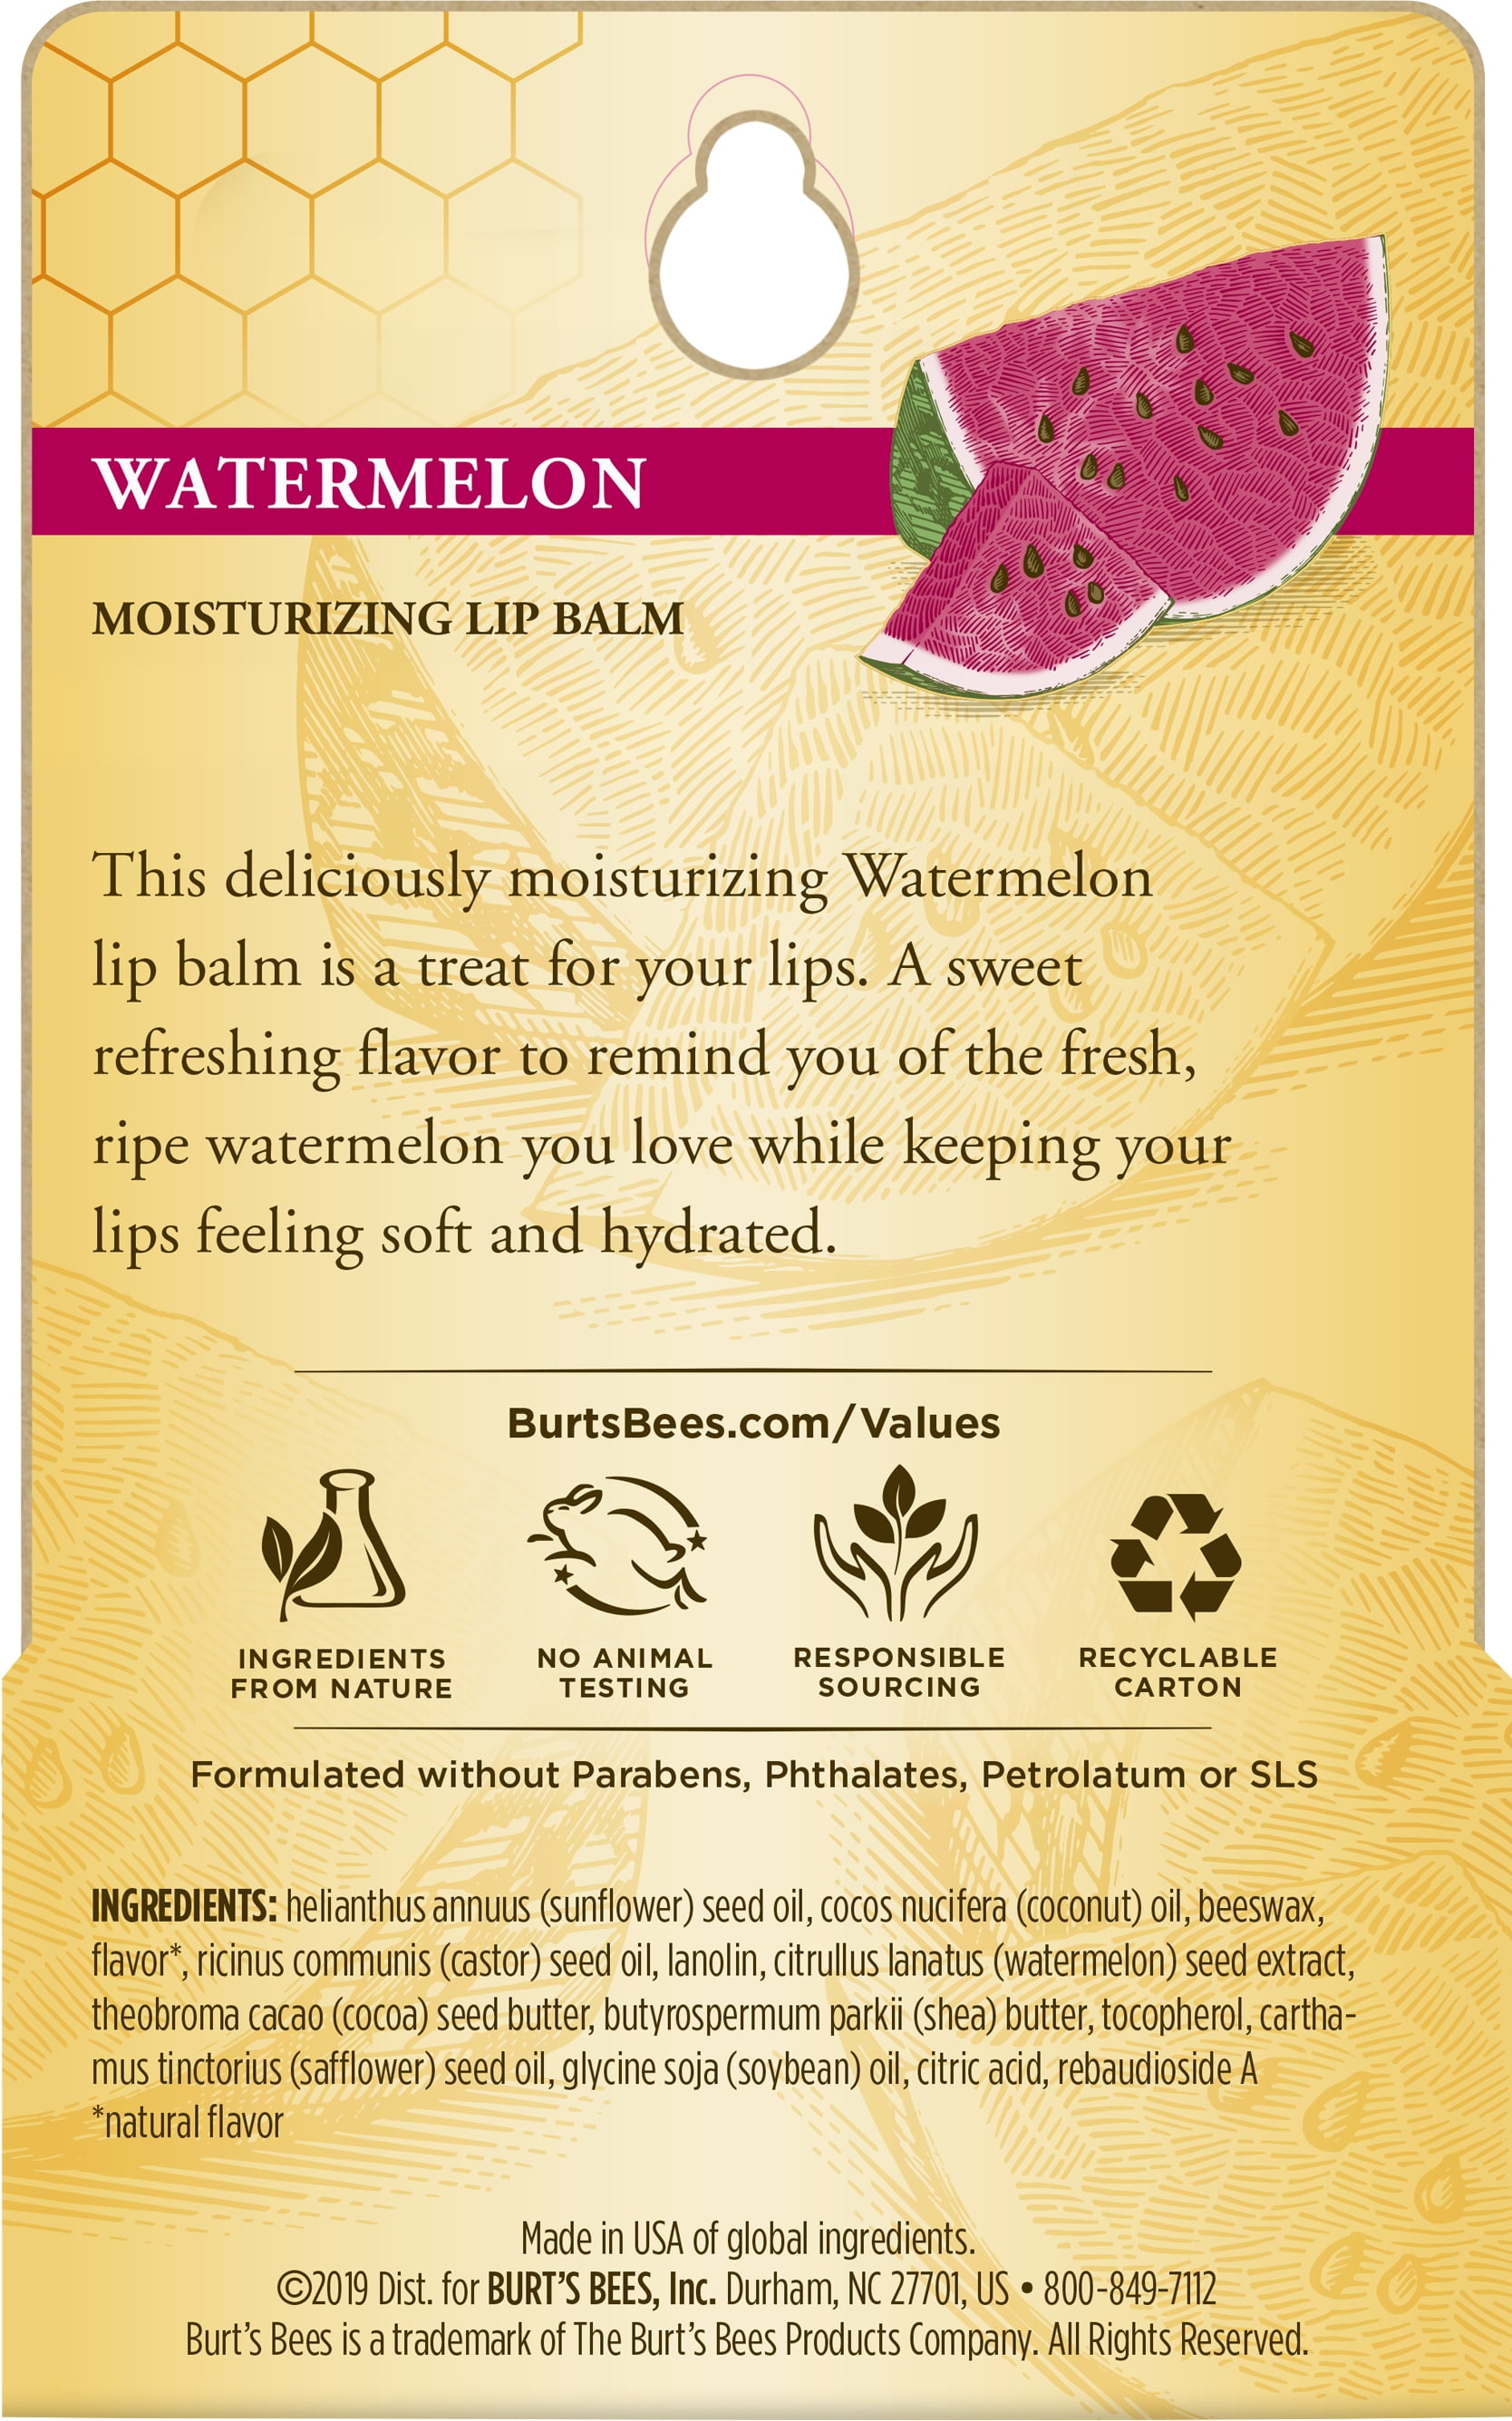 Burt's Bees Moisturizing Lip Balm, Watermelon